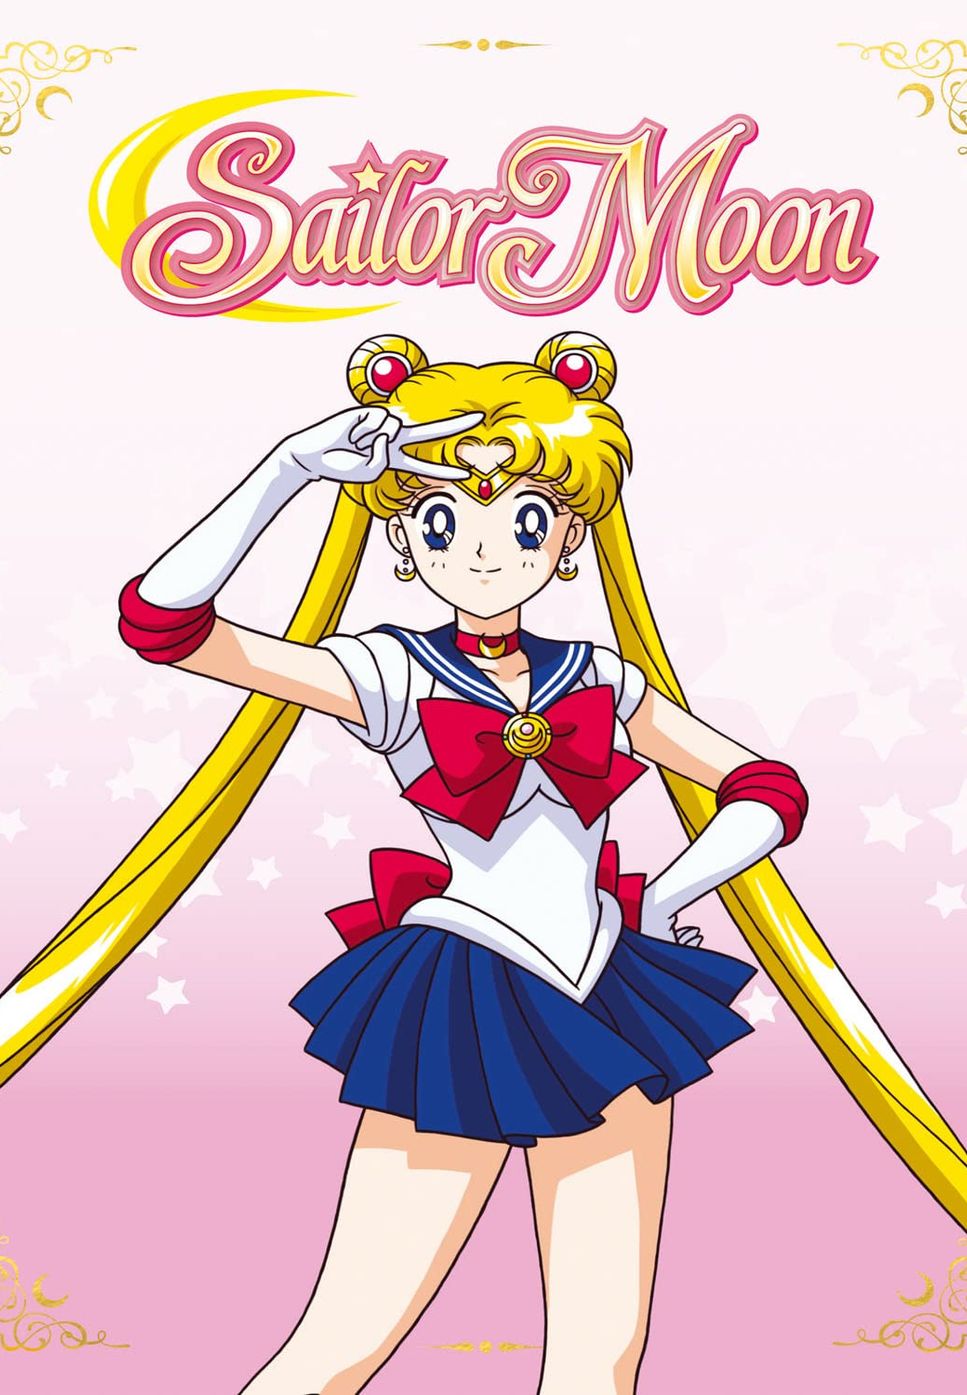 Yoko Ishida - Moonlight Densetsu (Sailor Moon Theme Song) by Pei-Ying Pan